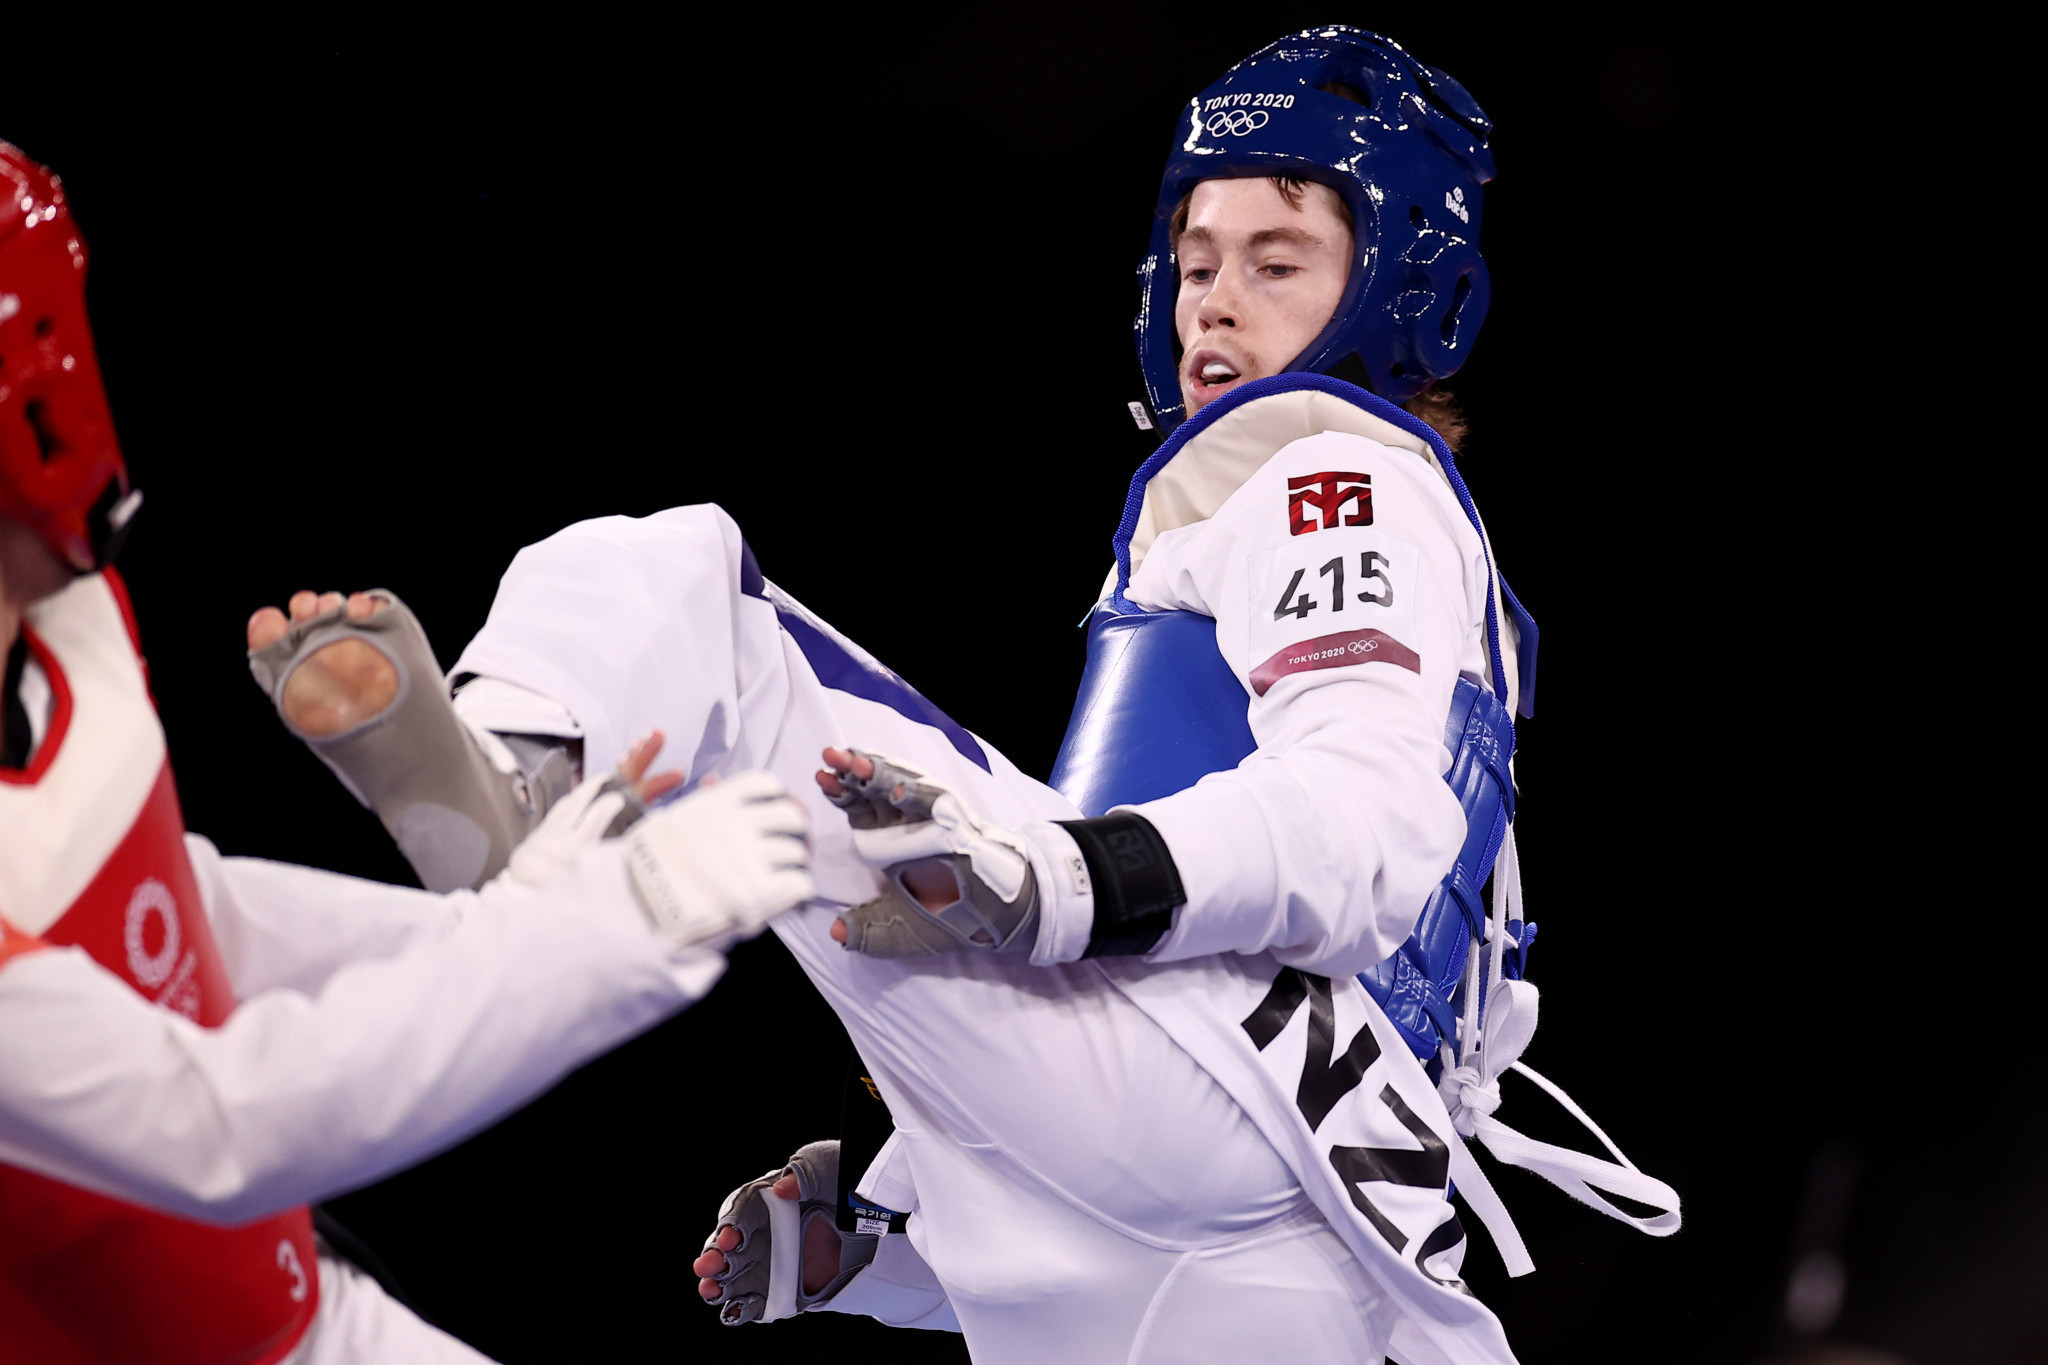 Tom Burns is one of New Zealand's best taekwondo athletes ©Getty Images